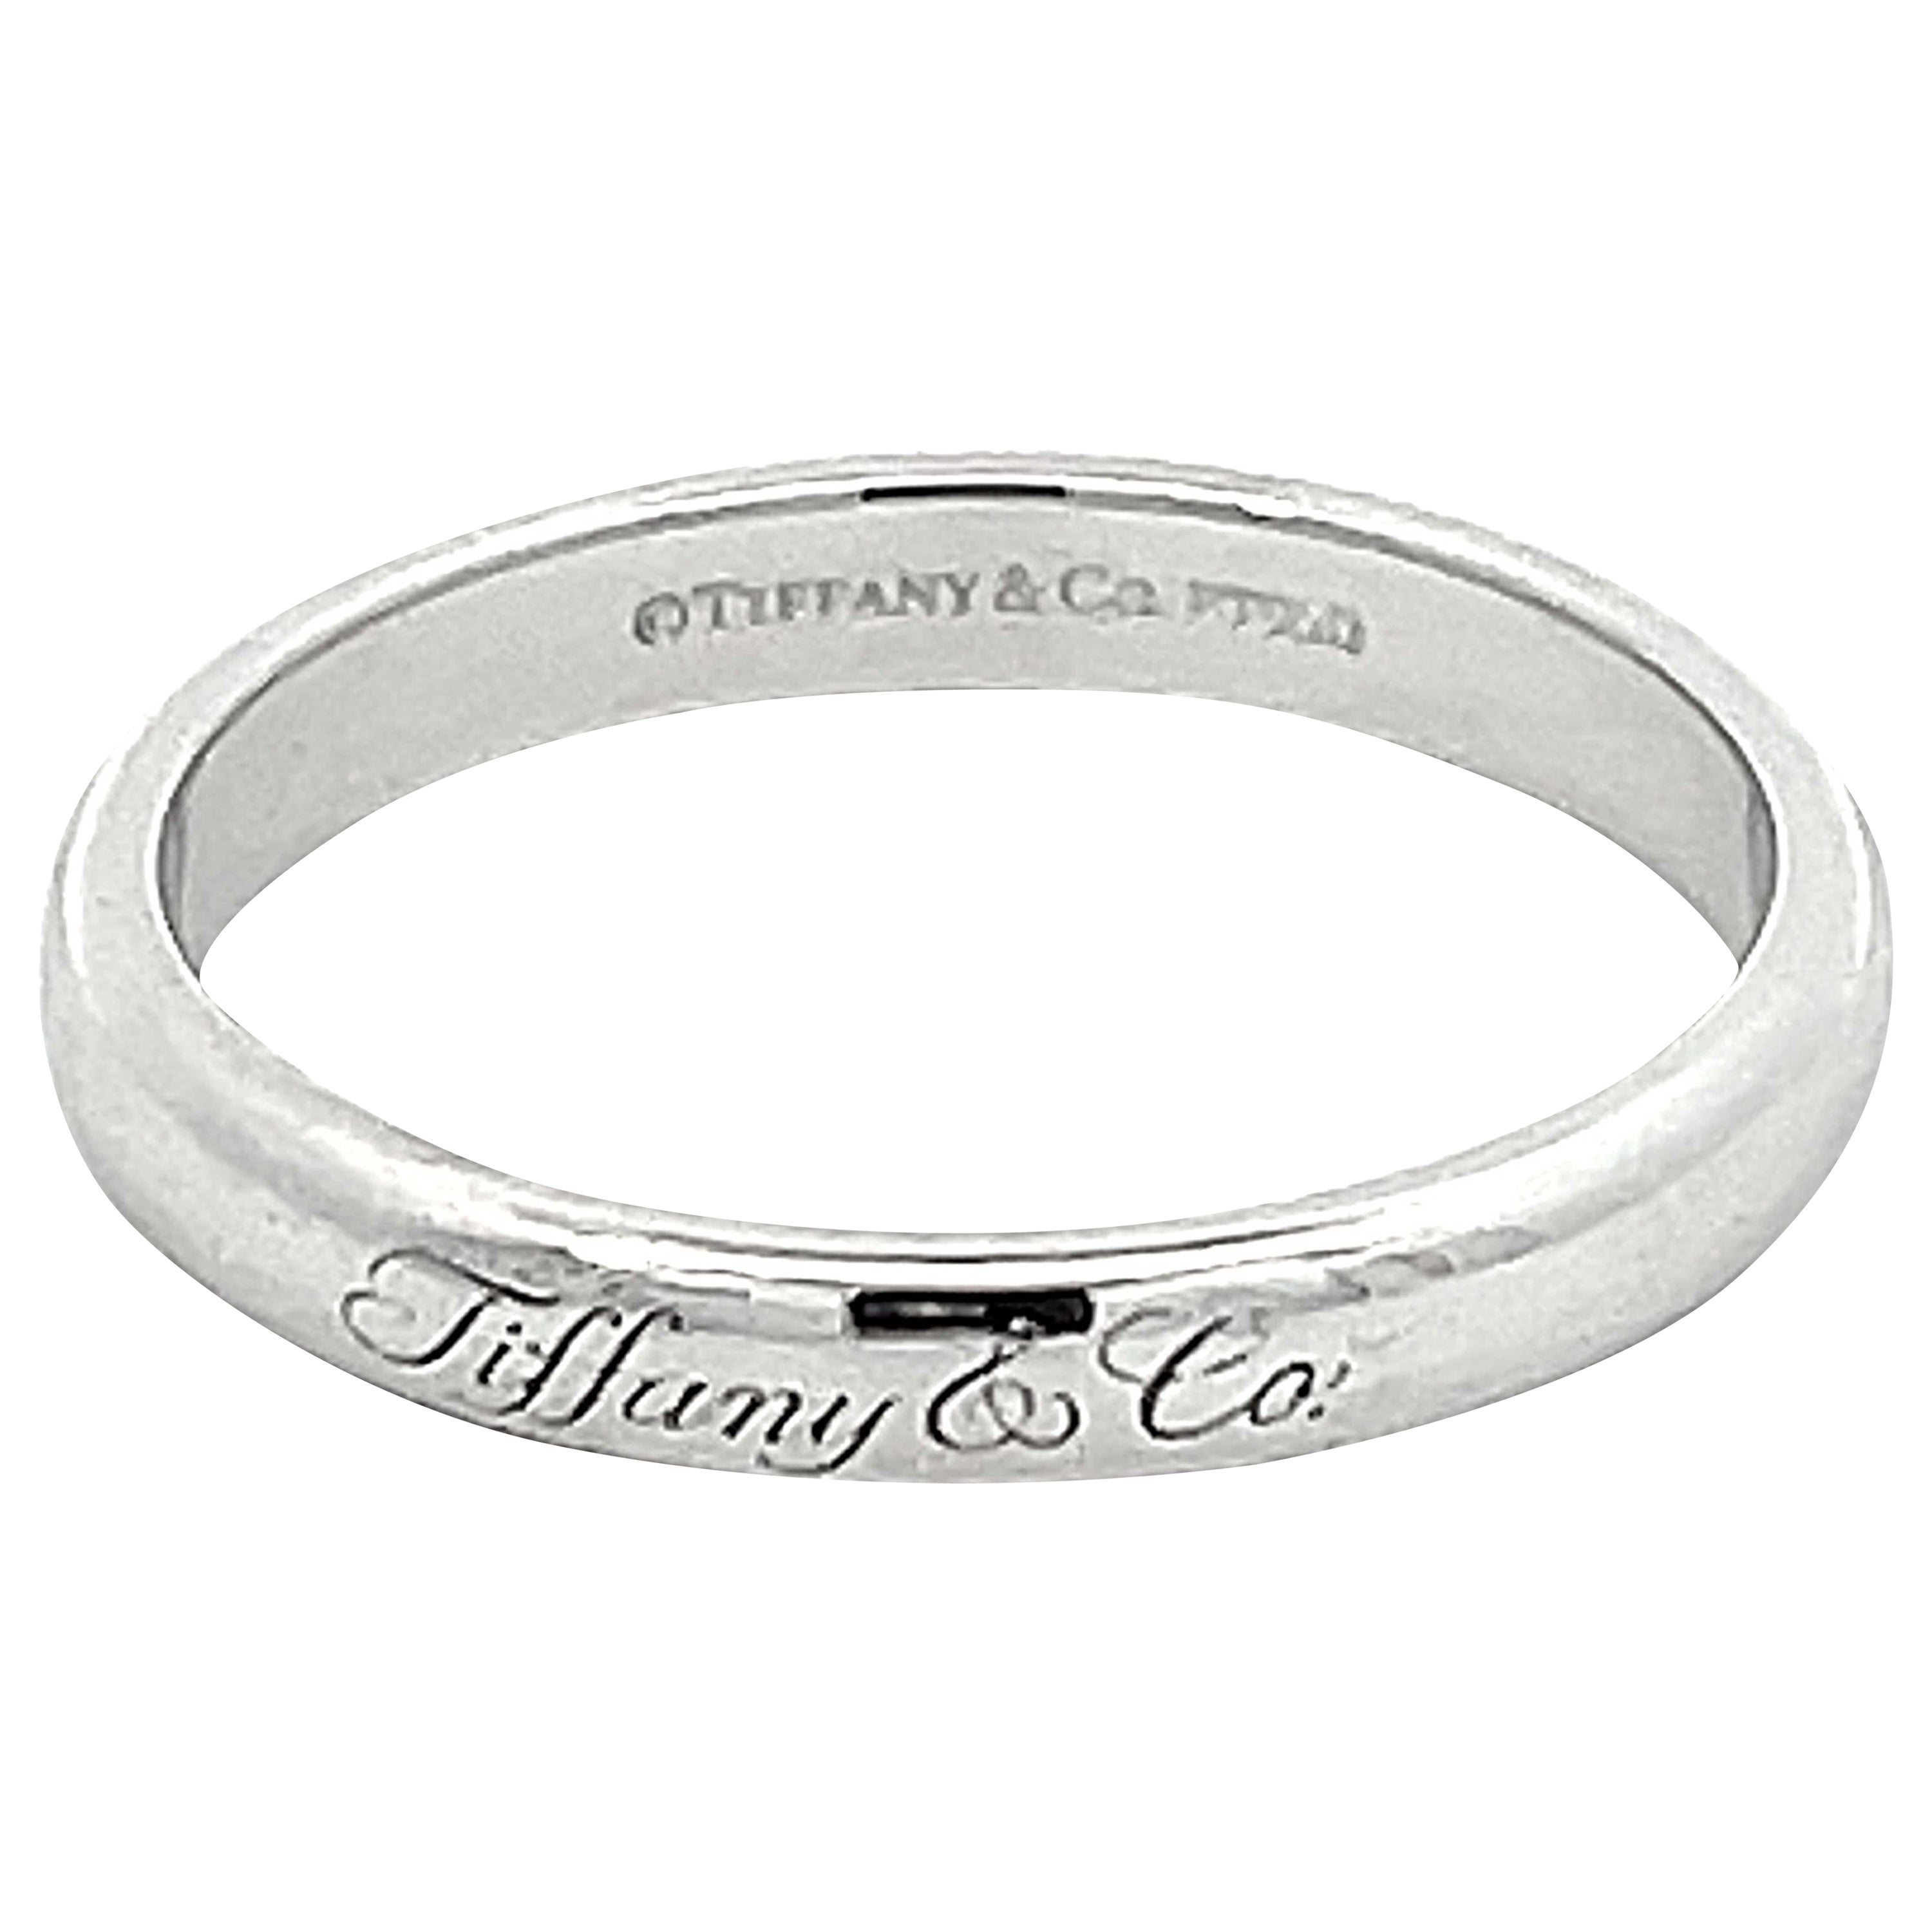 Vintage Tiffany & Co. Wedding Band Ring in Platinum